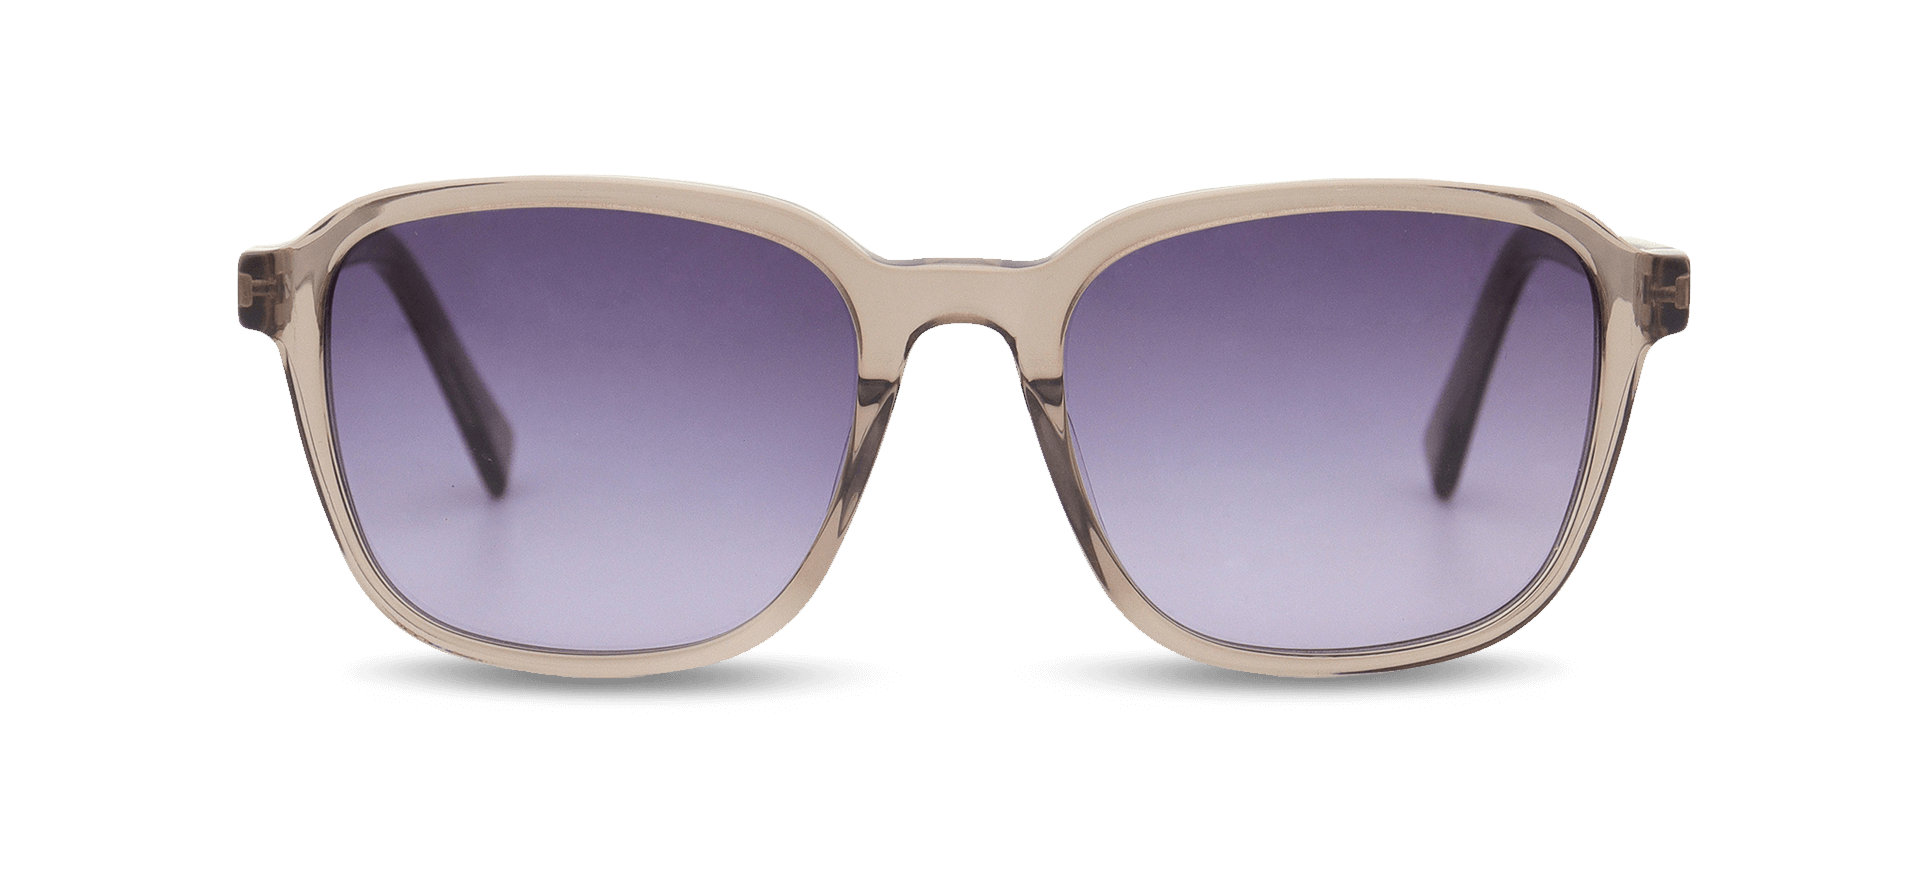 Modne četvrtaste sunčane naočale